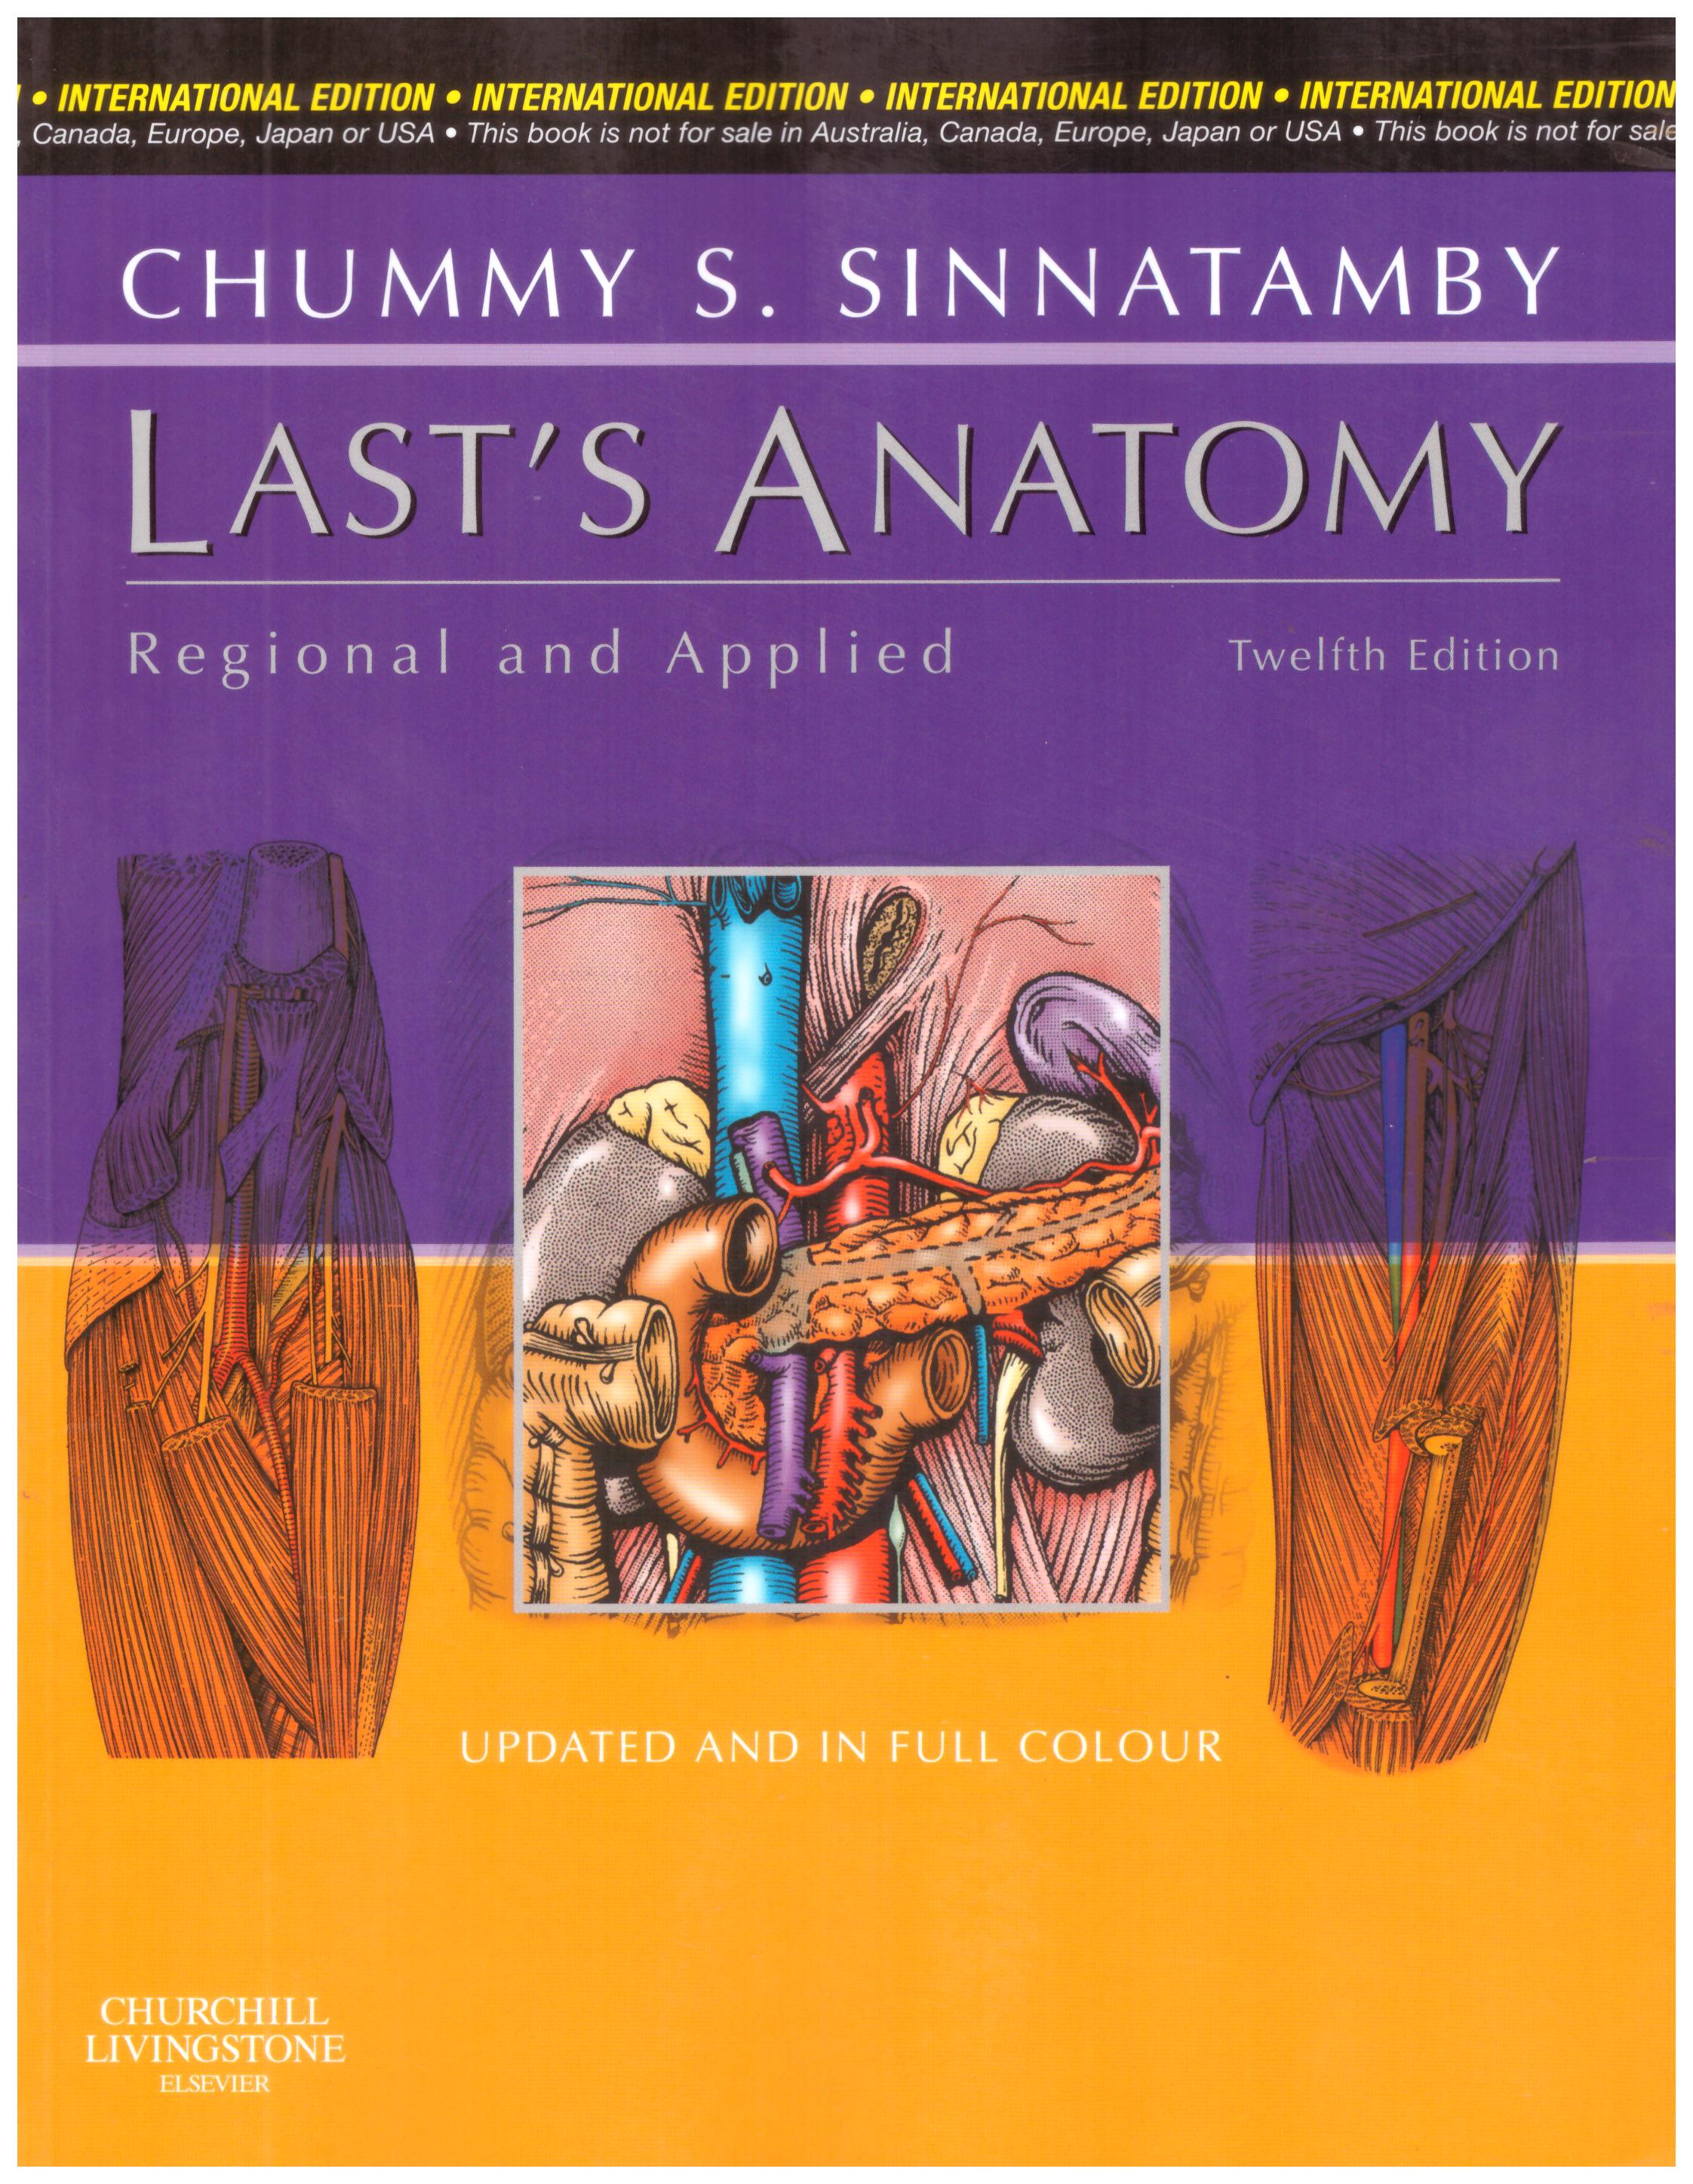 Lasts Anatomy Regional and Applied